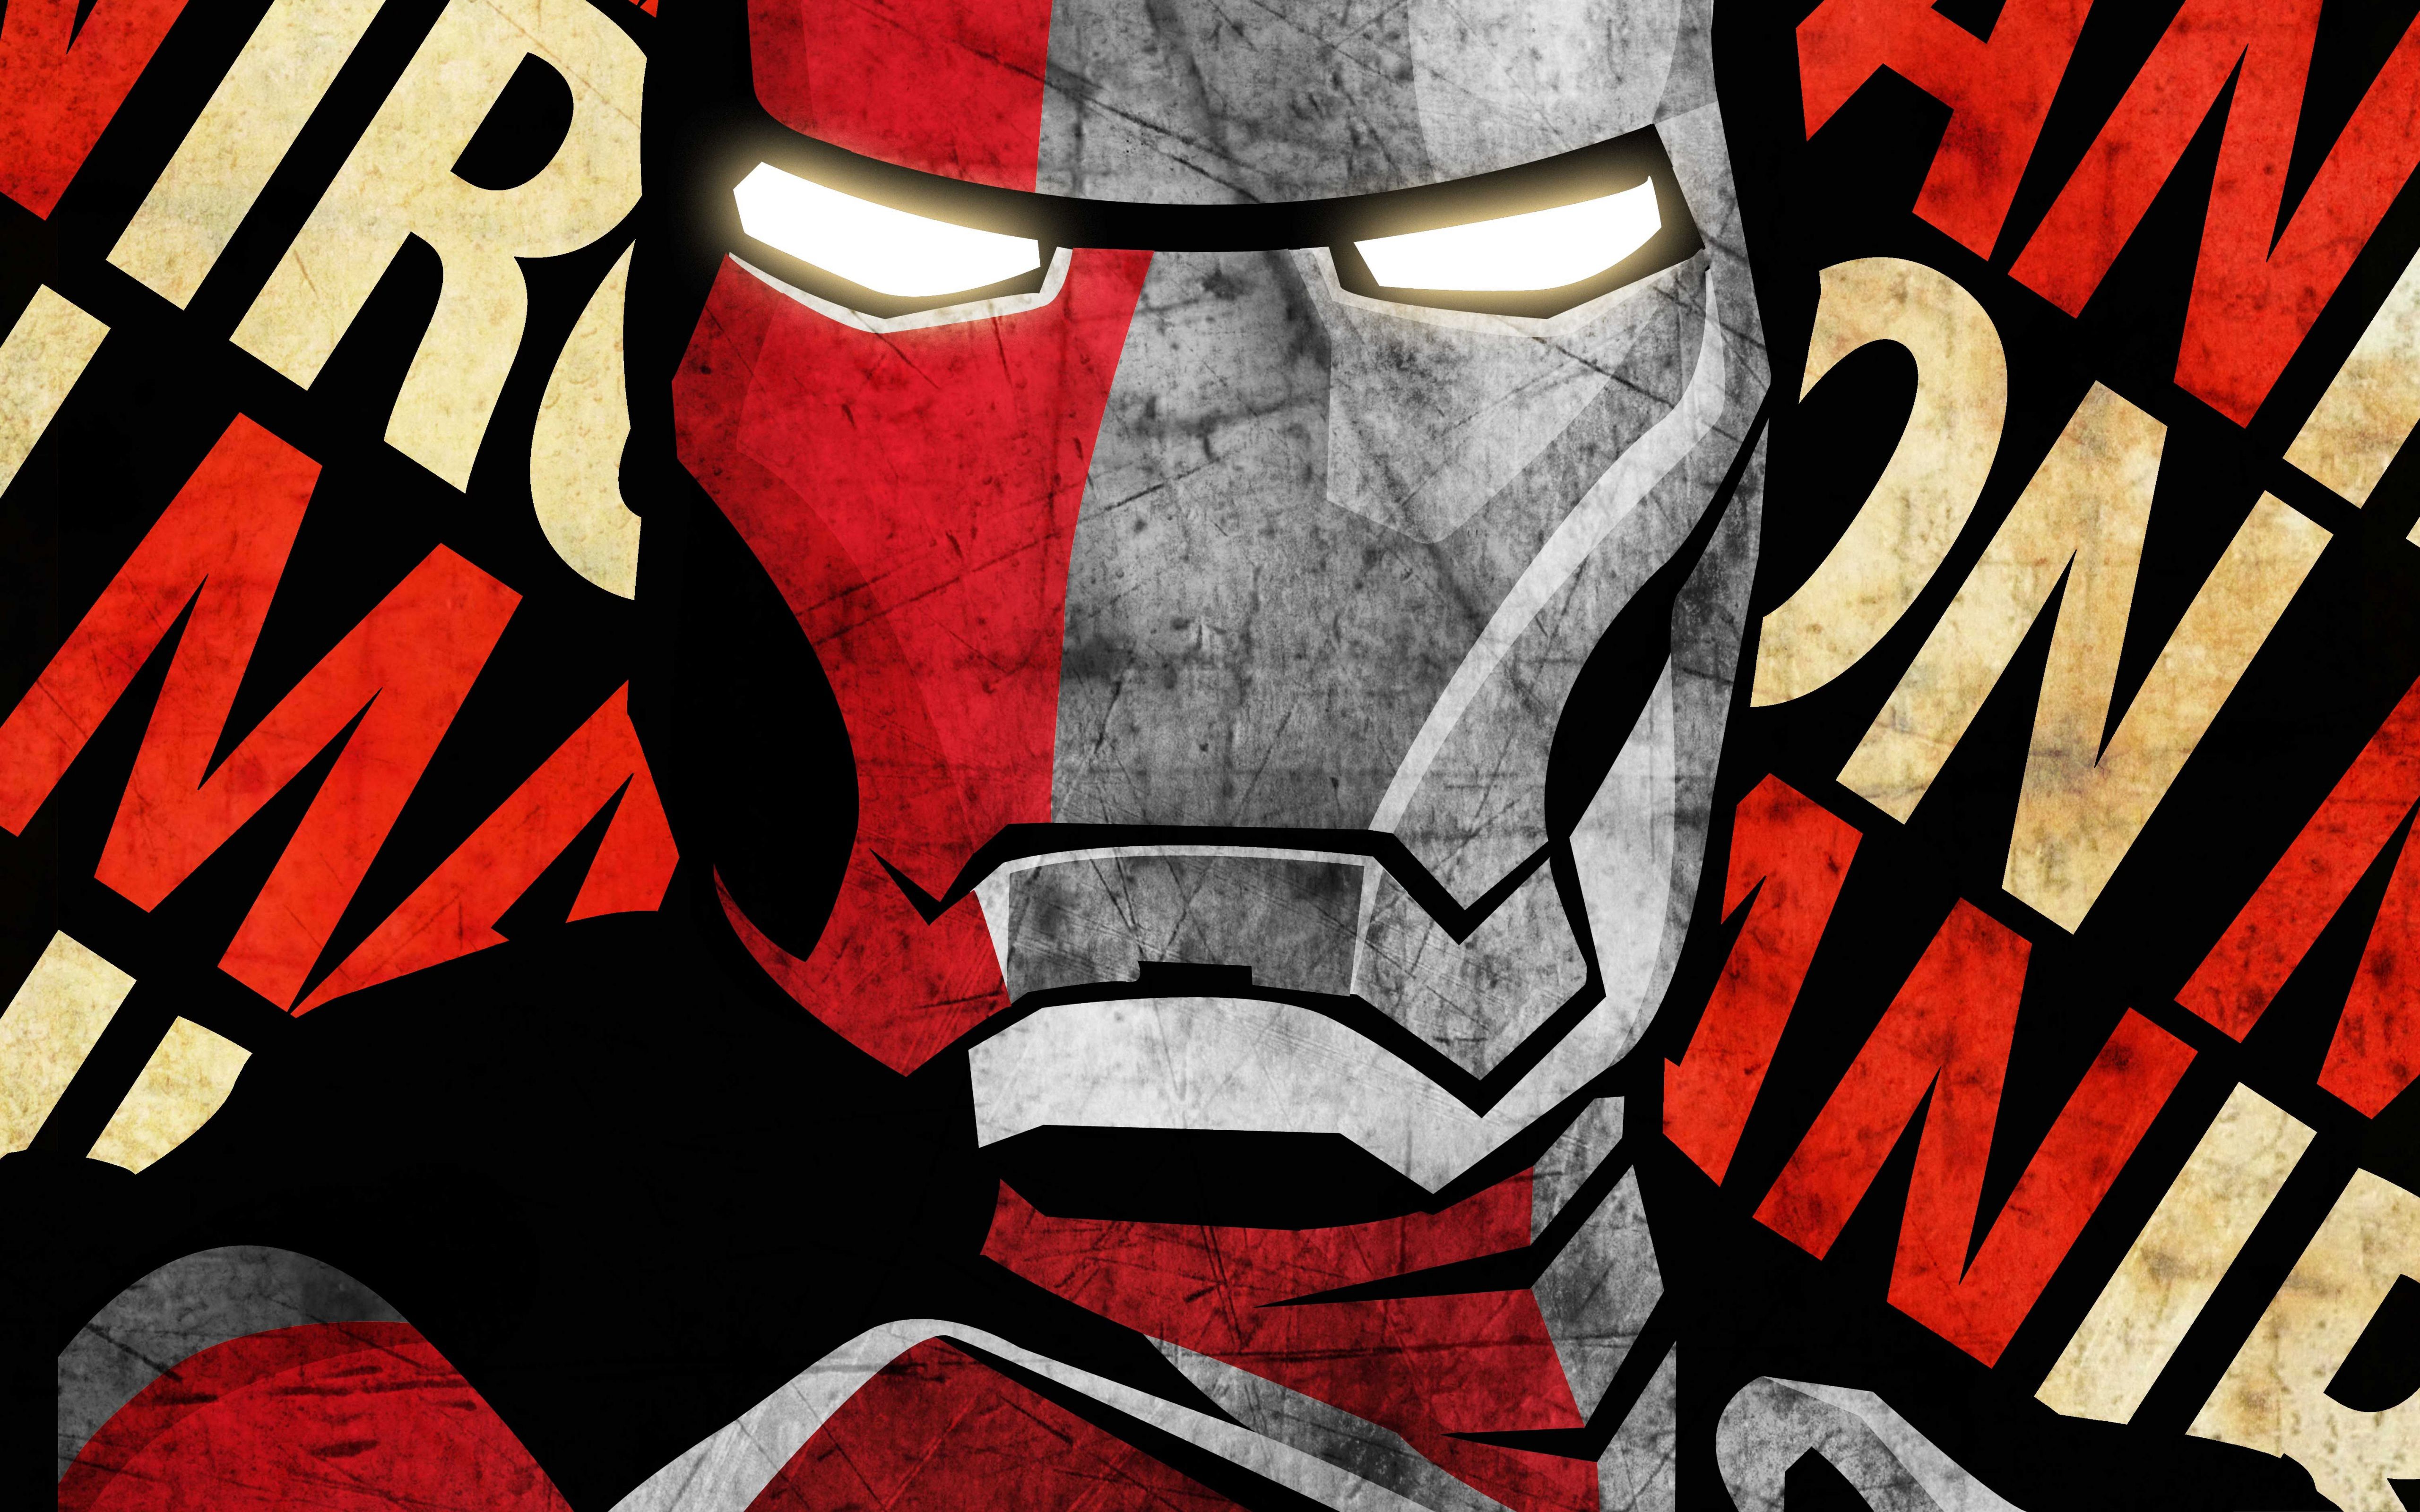 Iron man 3 artwork